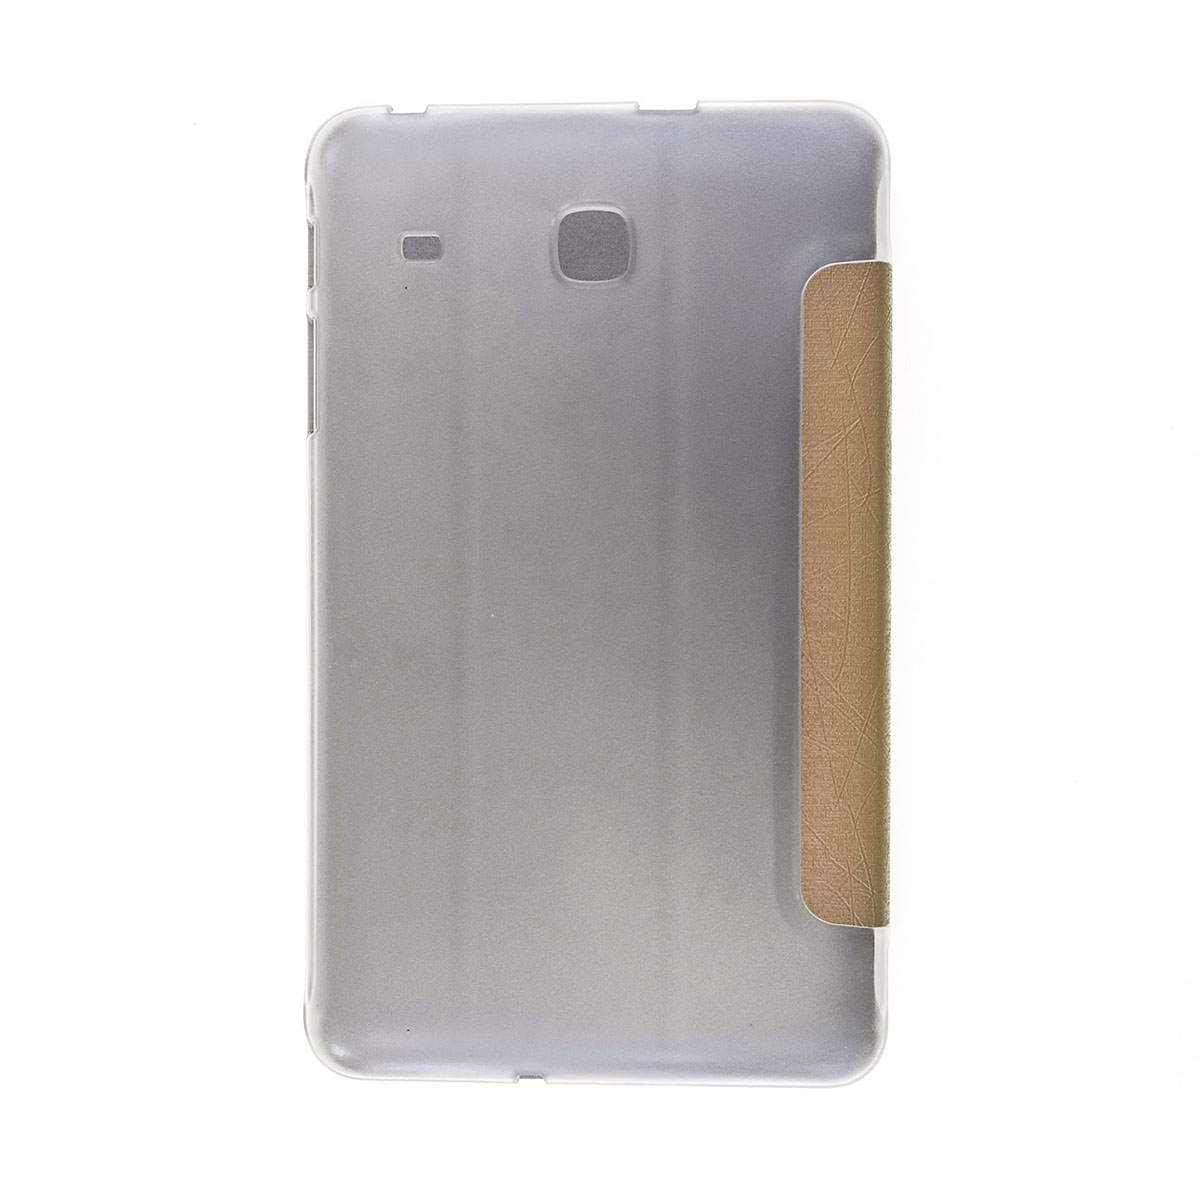 Чехол Folio Cover SAMSUNG Galaxy Tab E 8.0 (SM-T377), цвет золотистый.